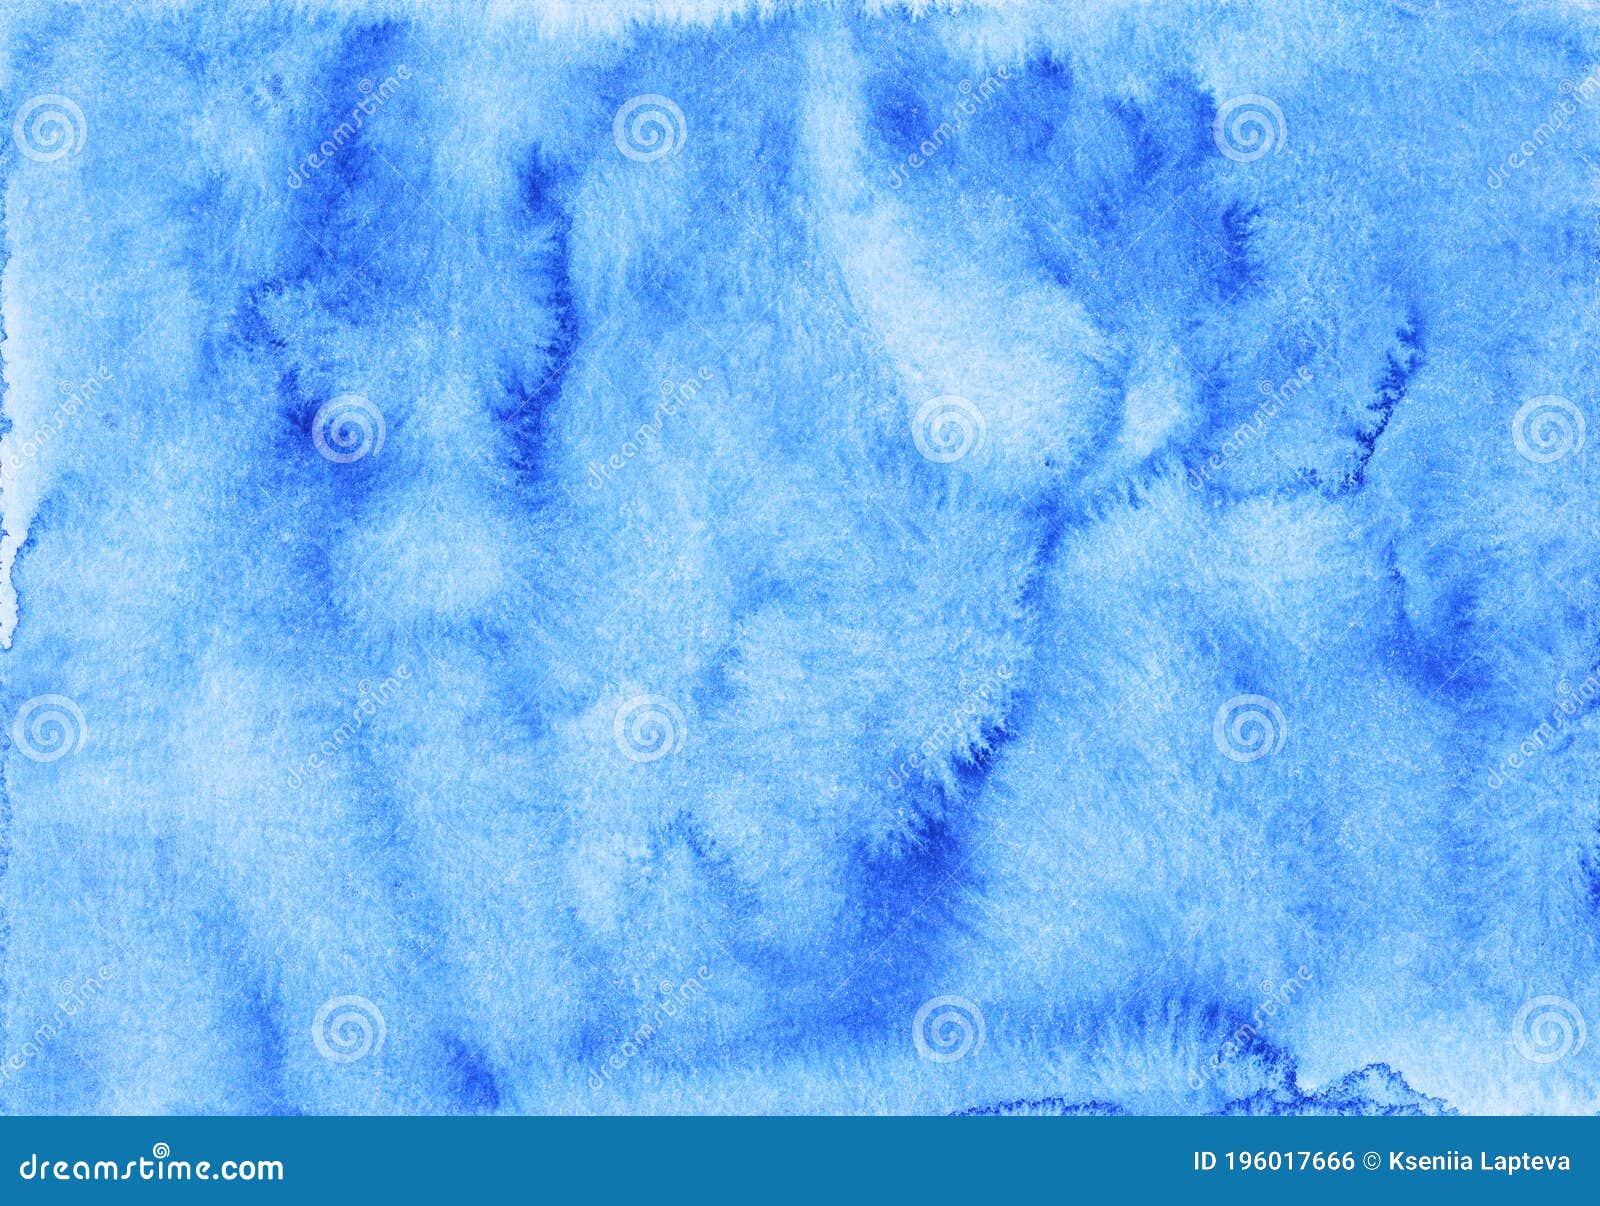 Spanish Sky Blue Solid Color Background Image  Free Image Generator